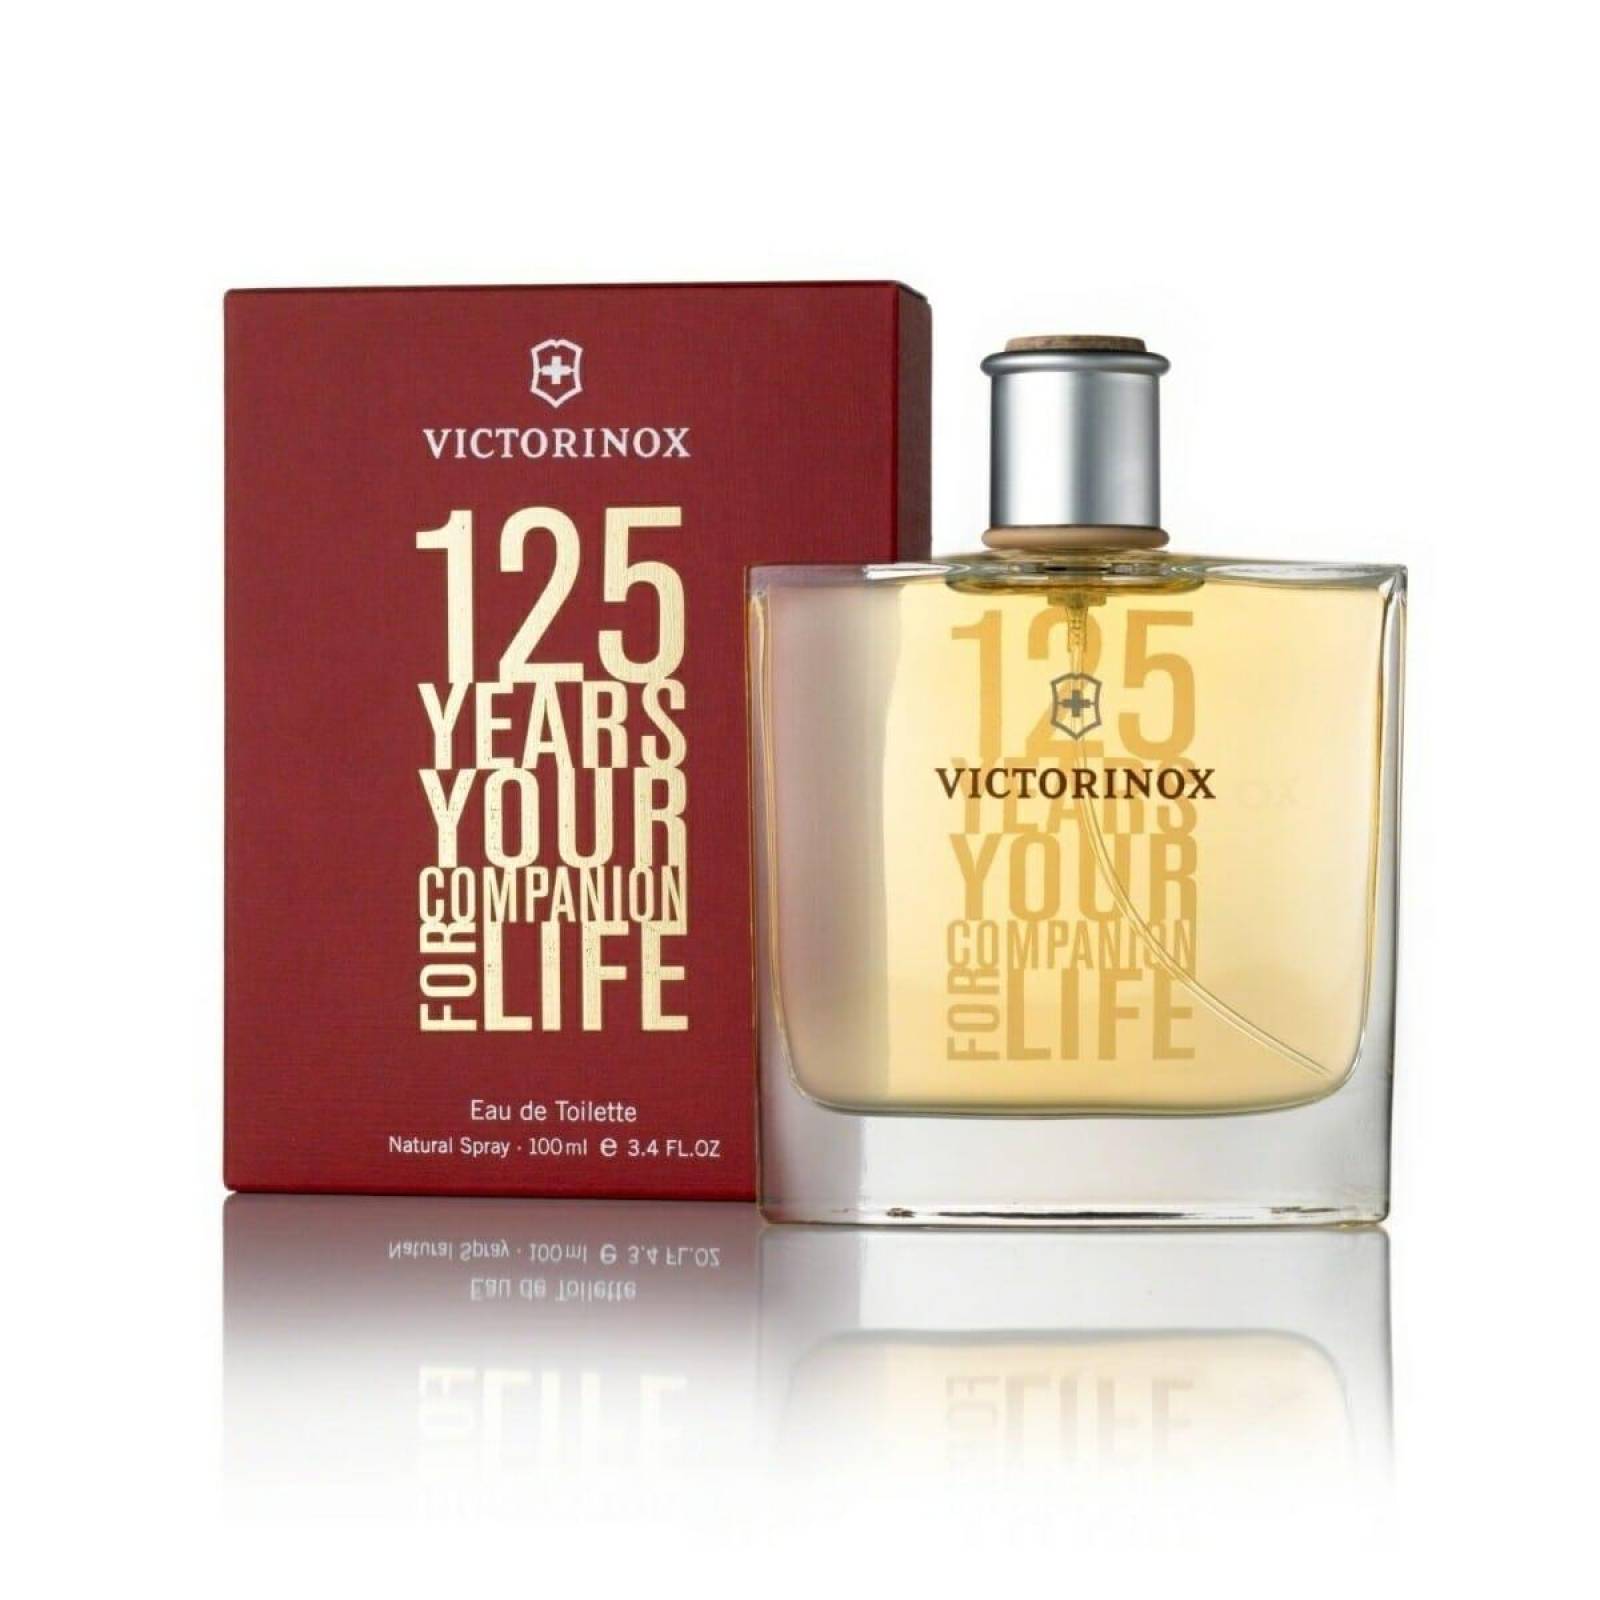 Loción 125 Years Your Companion For Life de Victorinox EDT 100 ml